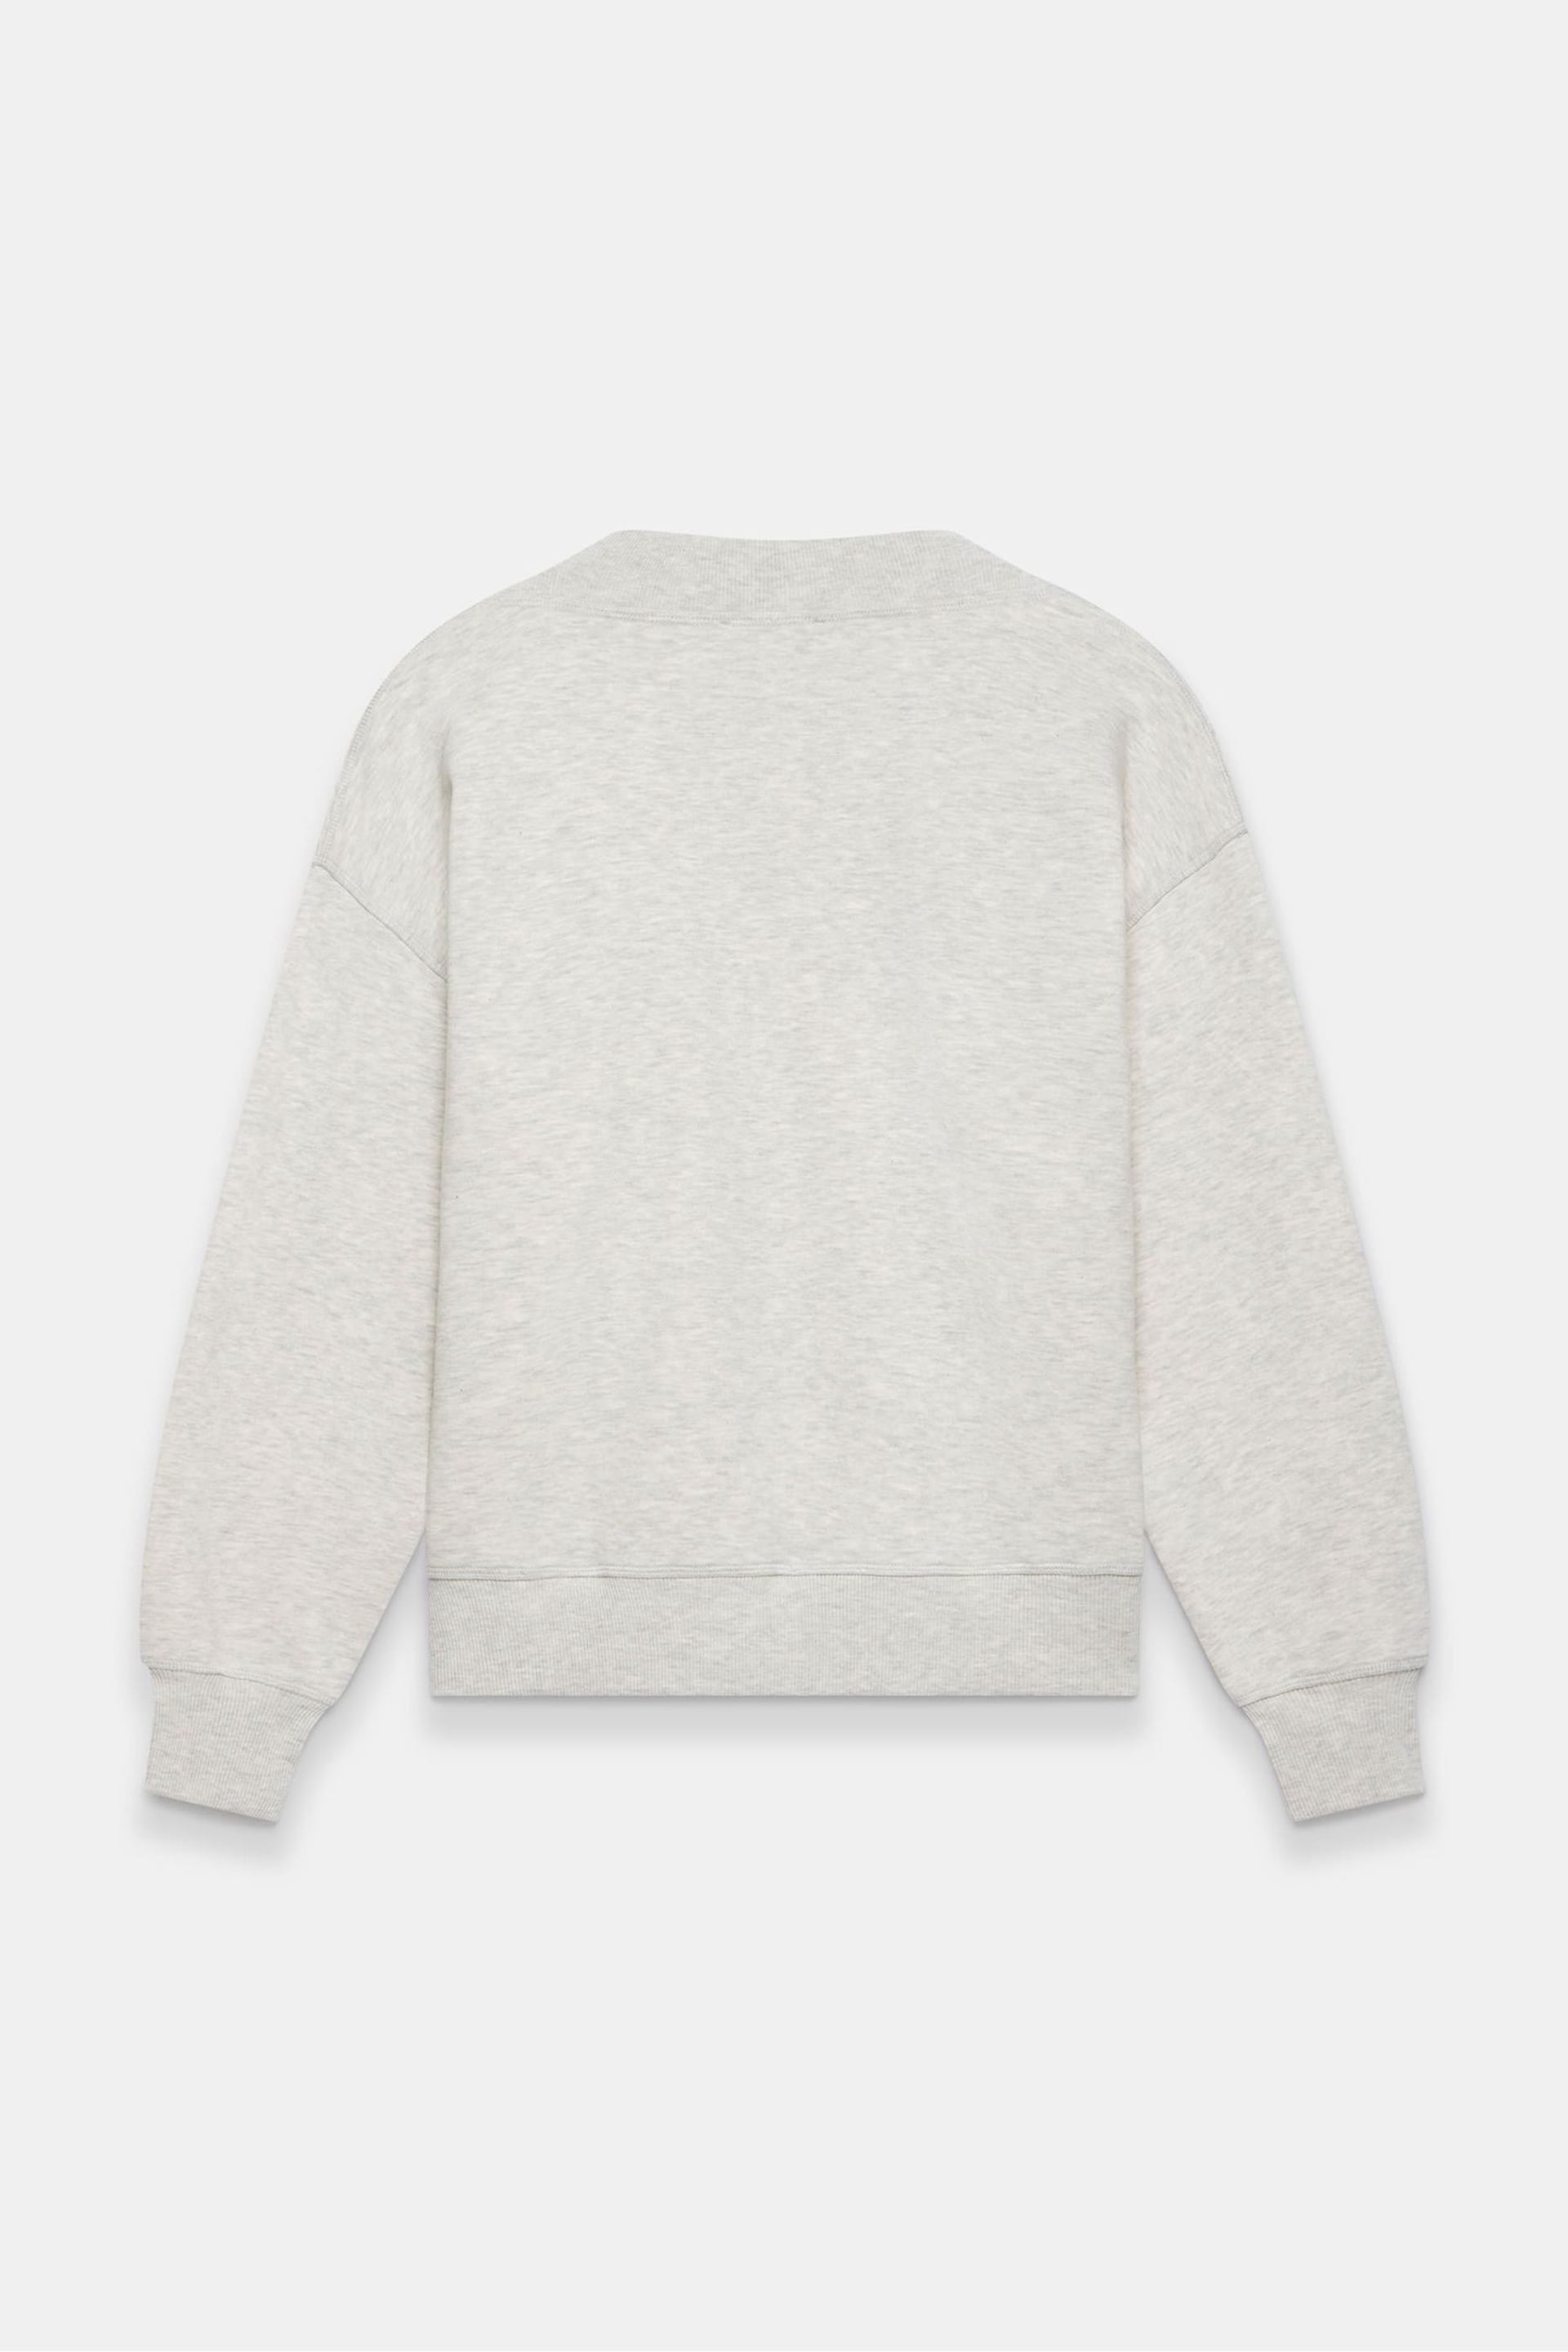 Mint Velvet Grey Ribbed High Neck Sweatshirt - Image 4 of 4